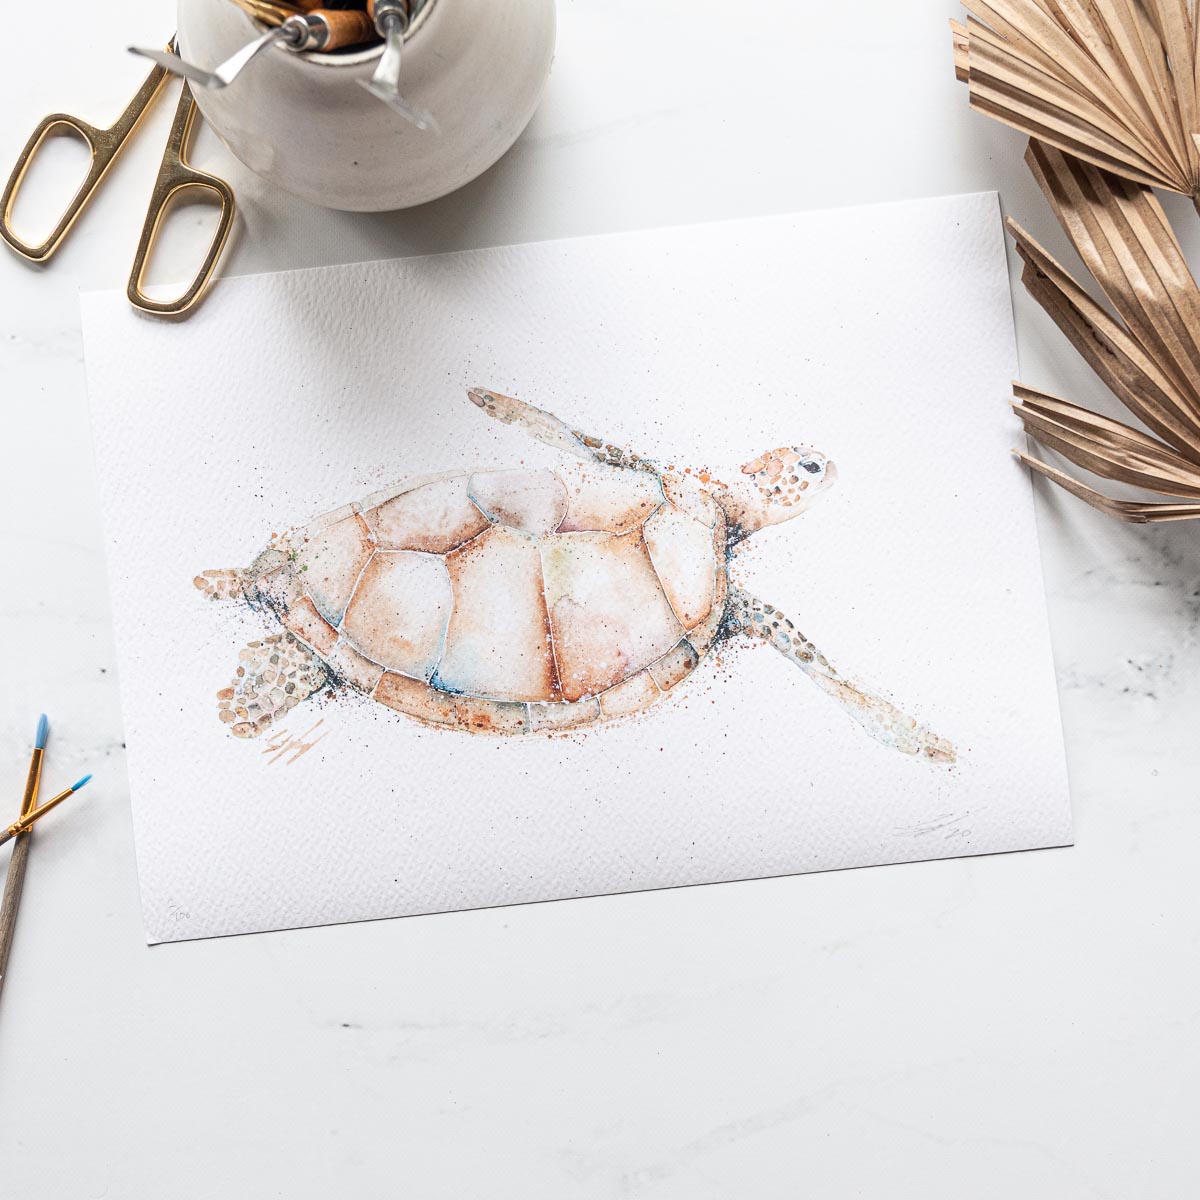 Turtle artwork print by SEA